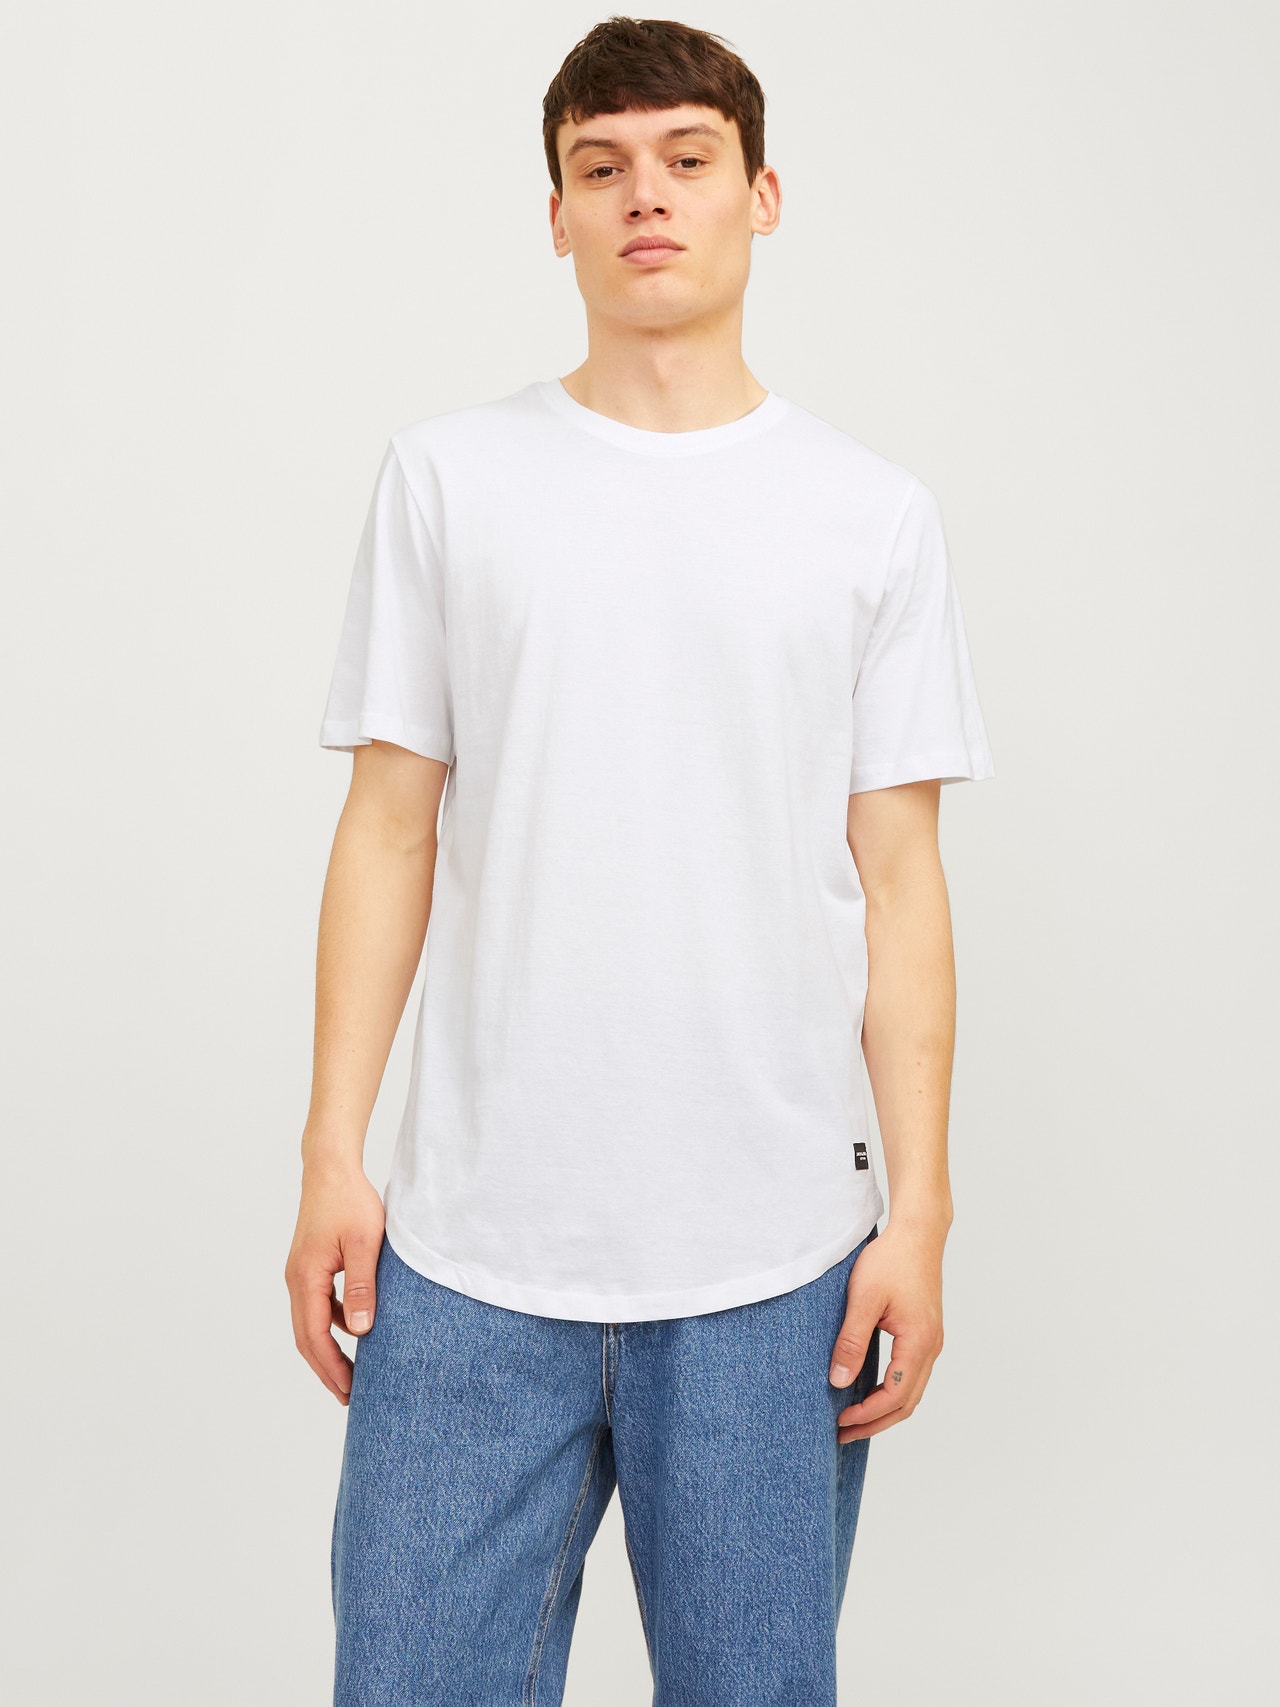 Jack & Jones 5-pack Plain Crew neck T-shirt -White - 12183653